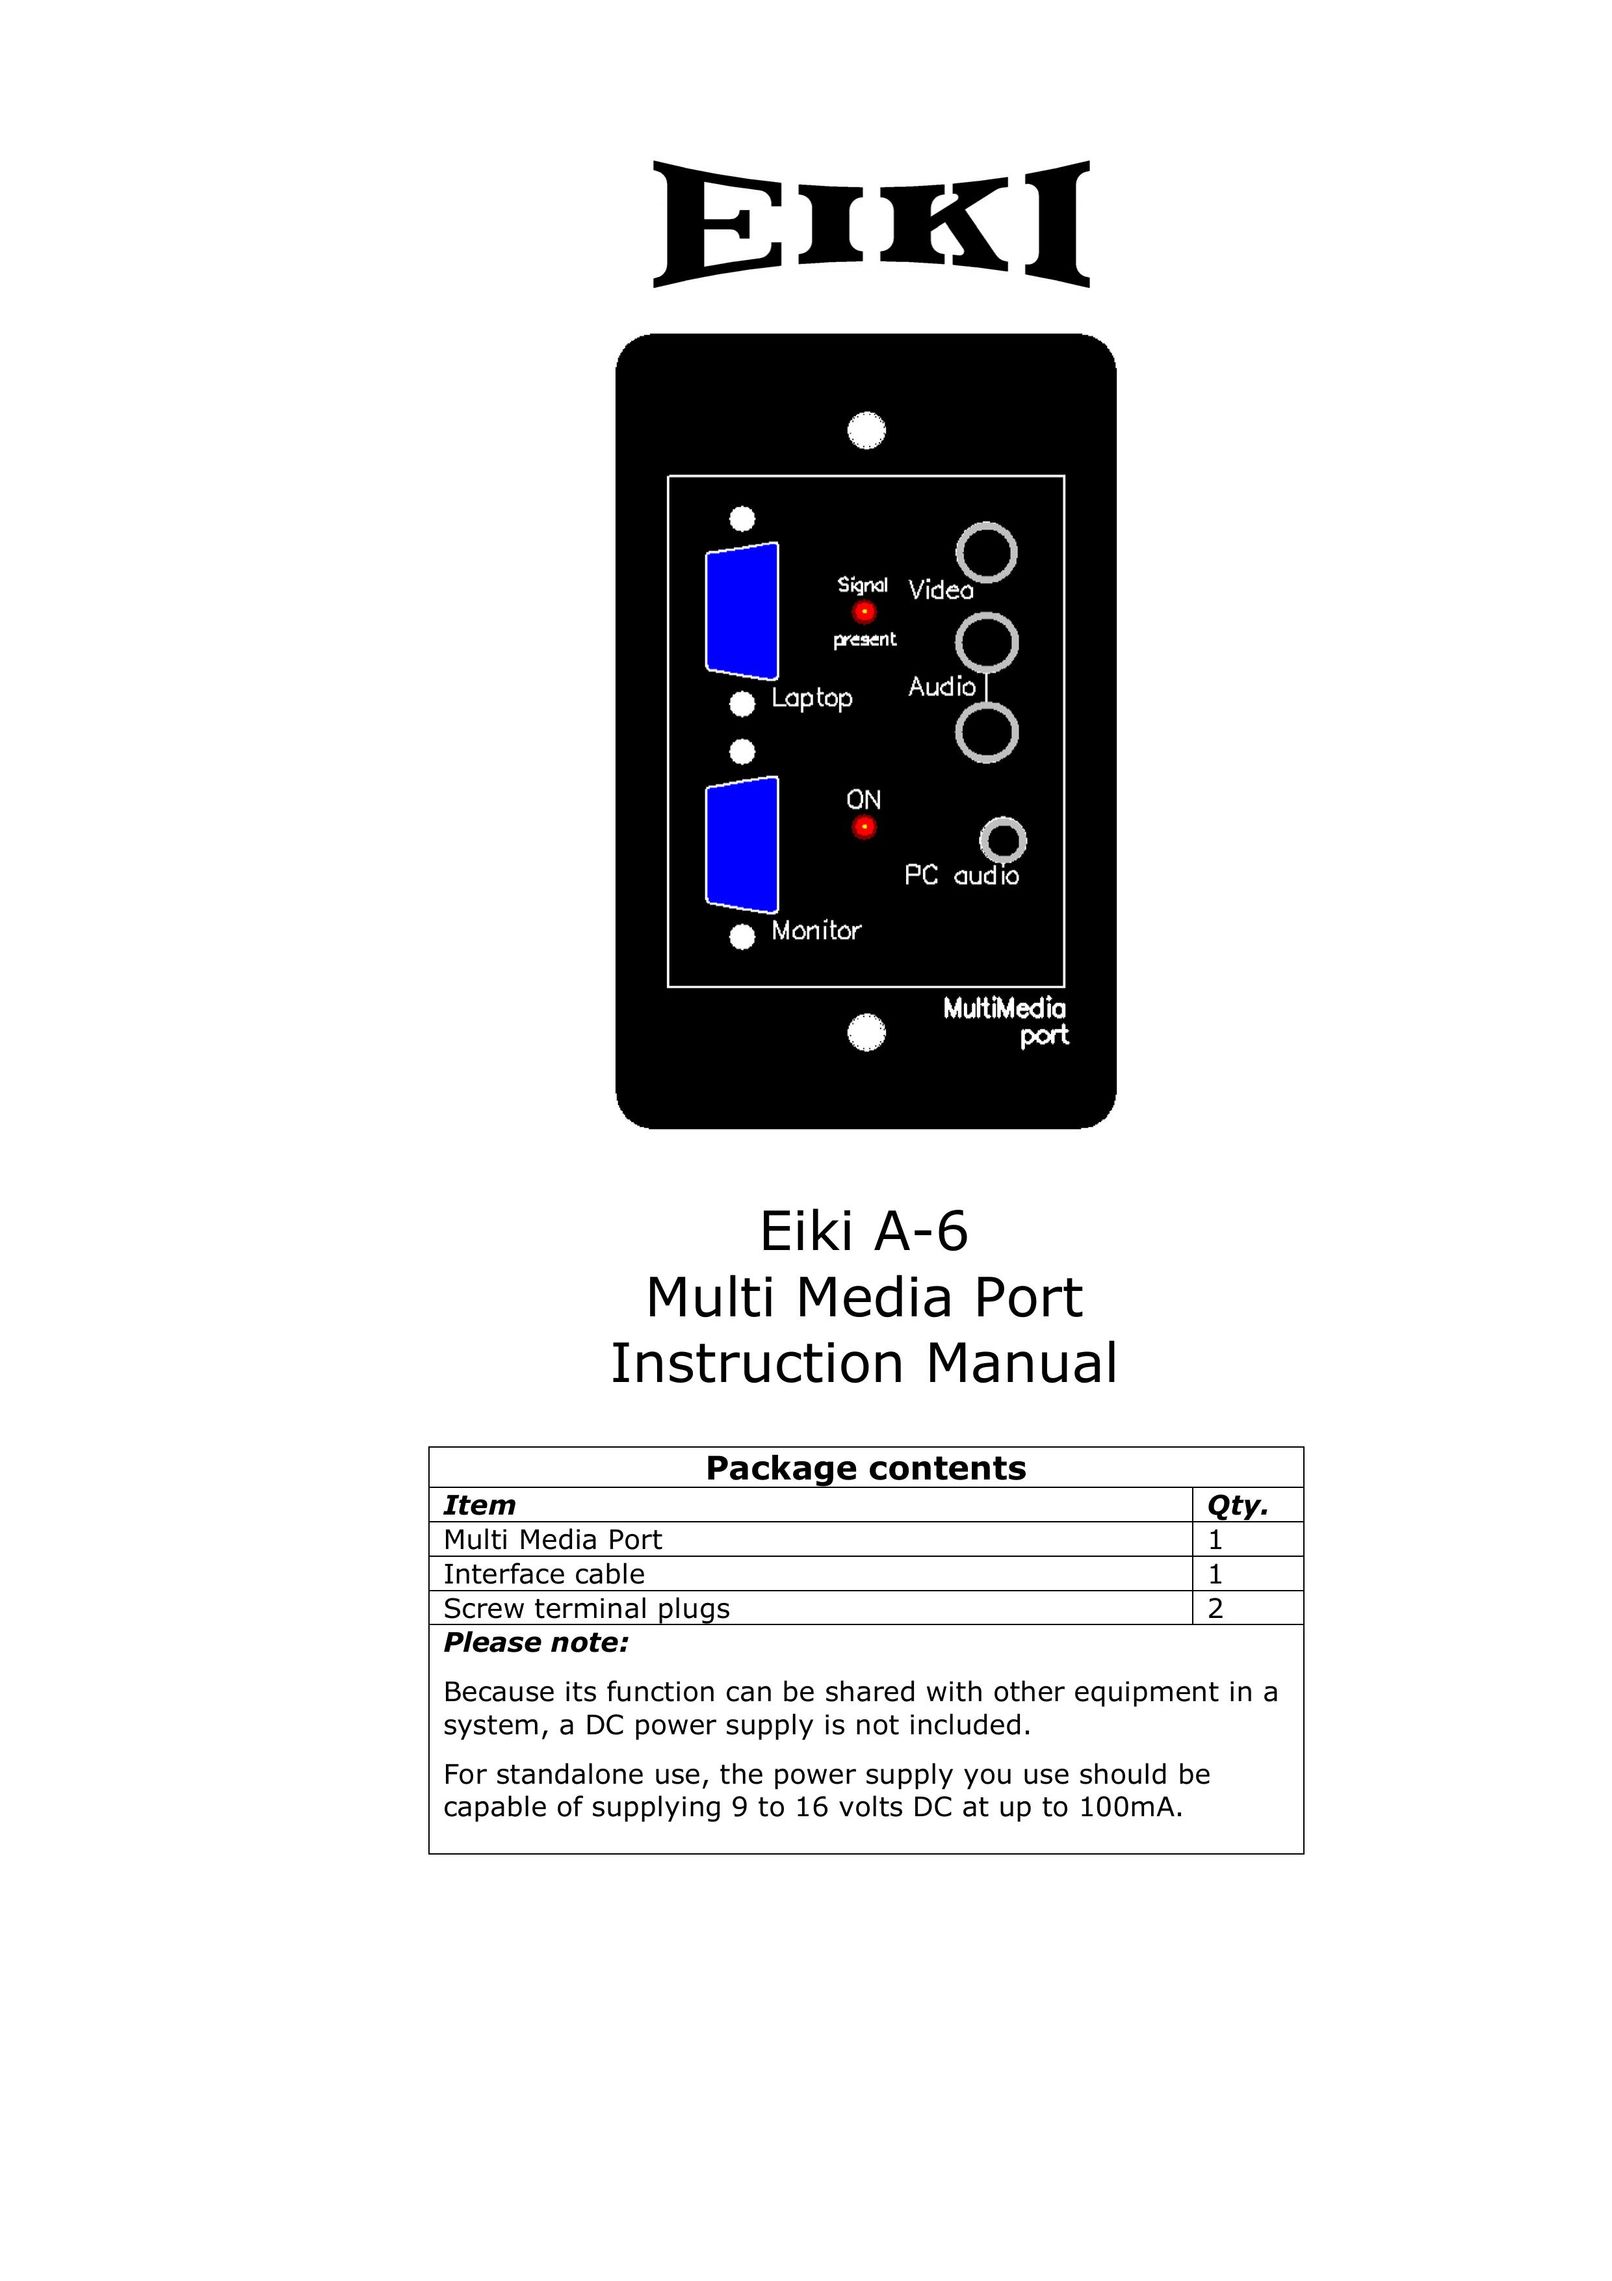 Eiki A-6 Network Card User Manual